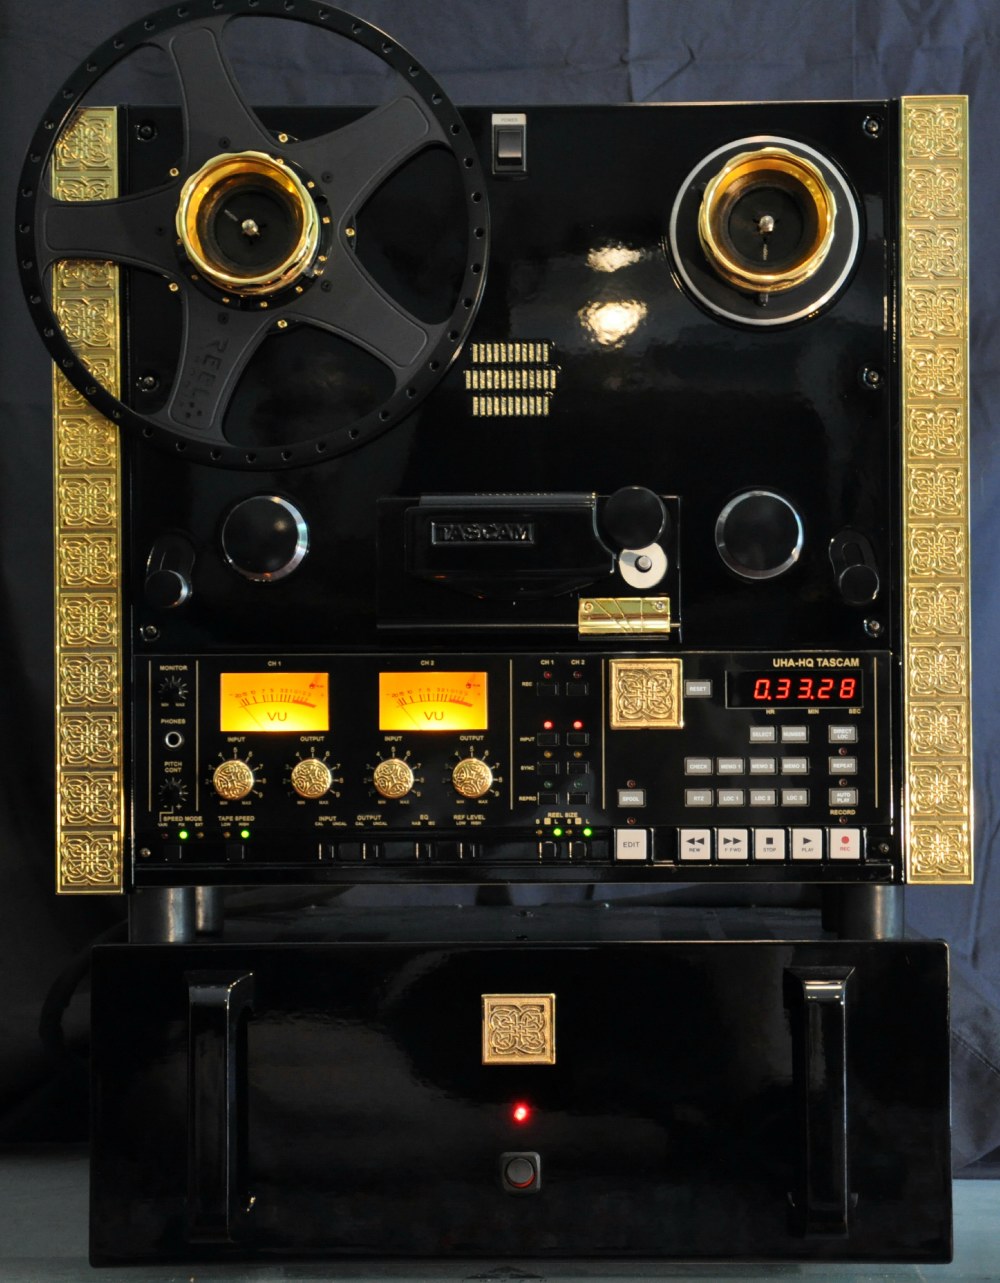 Black & Gold Tape Deck